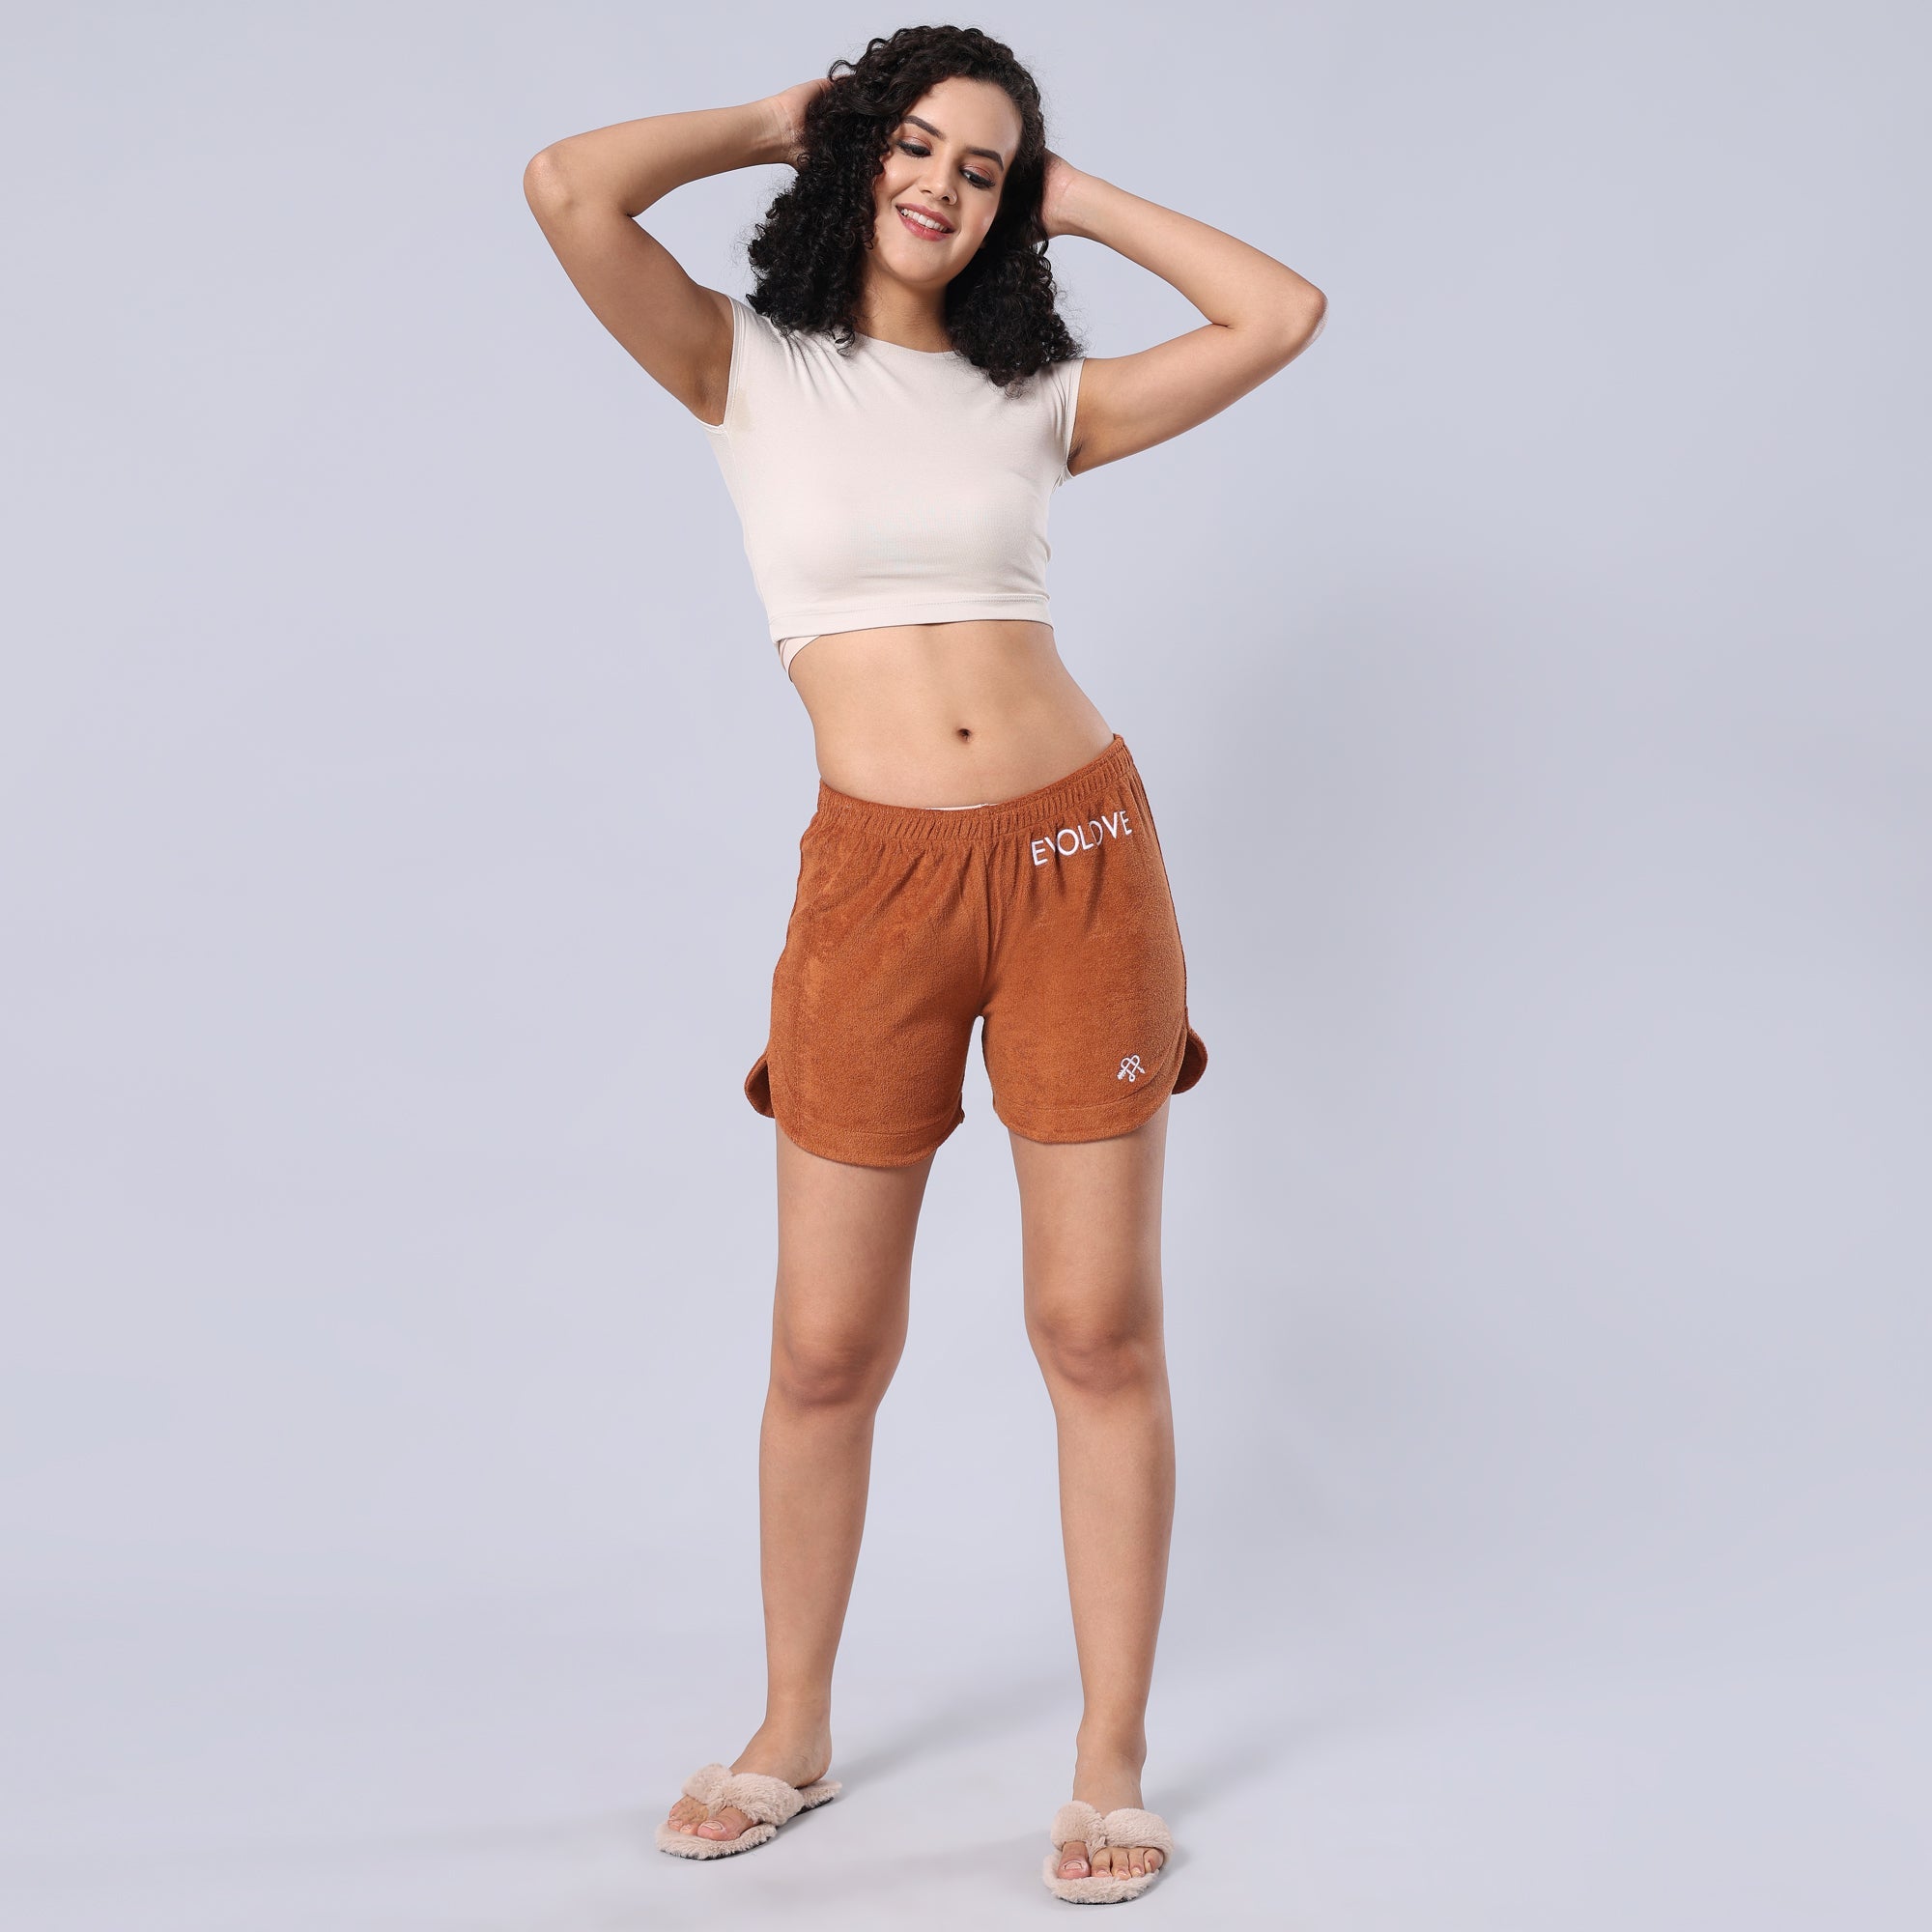 Evolove Women's Cotton Velvet Solid Shorts Super Soft Comfortable